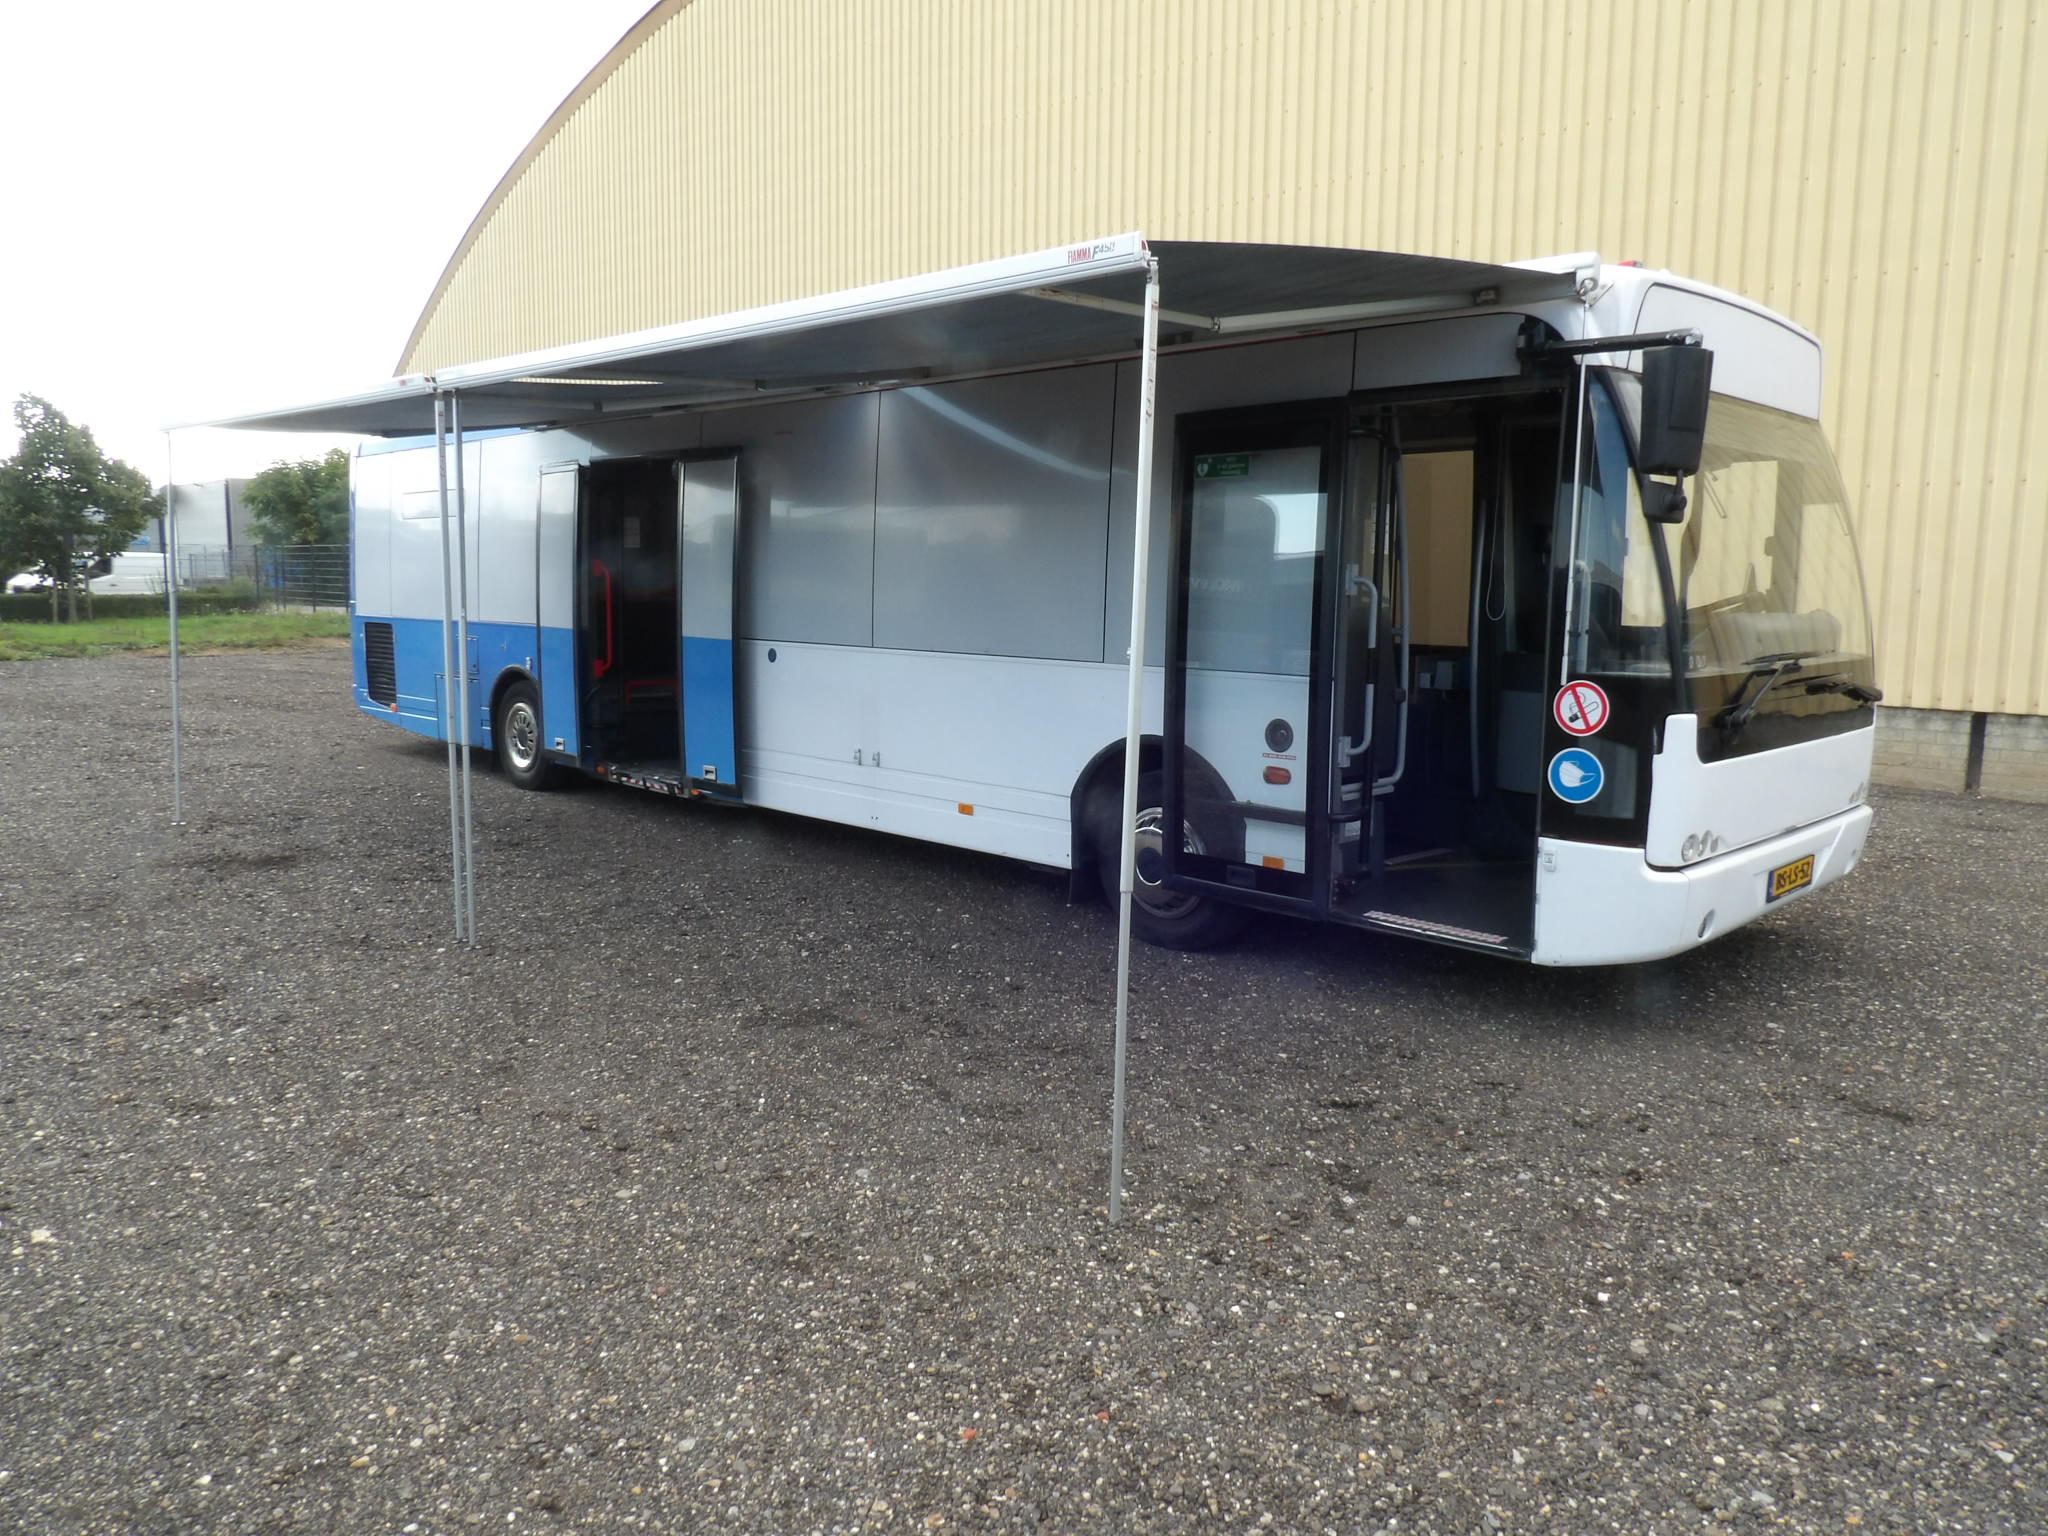 Featured image for “9x VDL Berkhof Ambassador 200, Euro 5 EEV SPECIAL BUS”